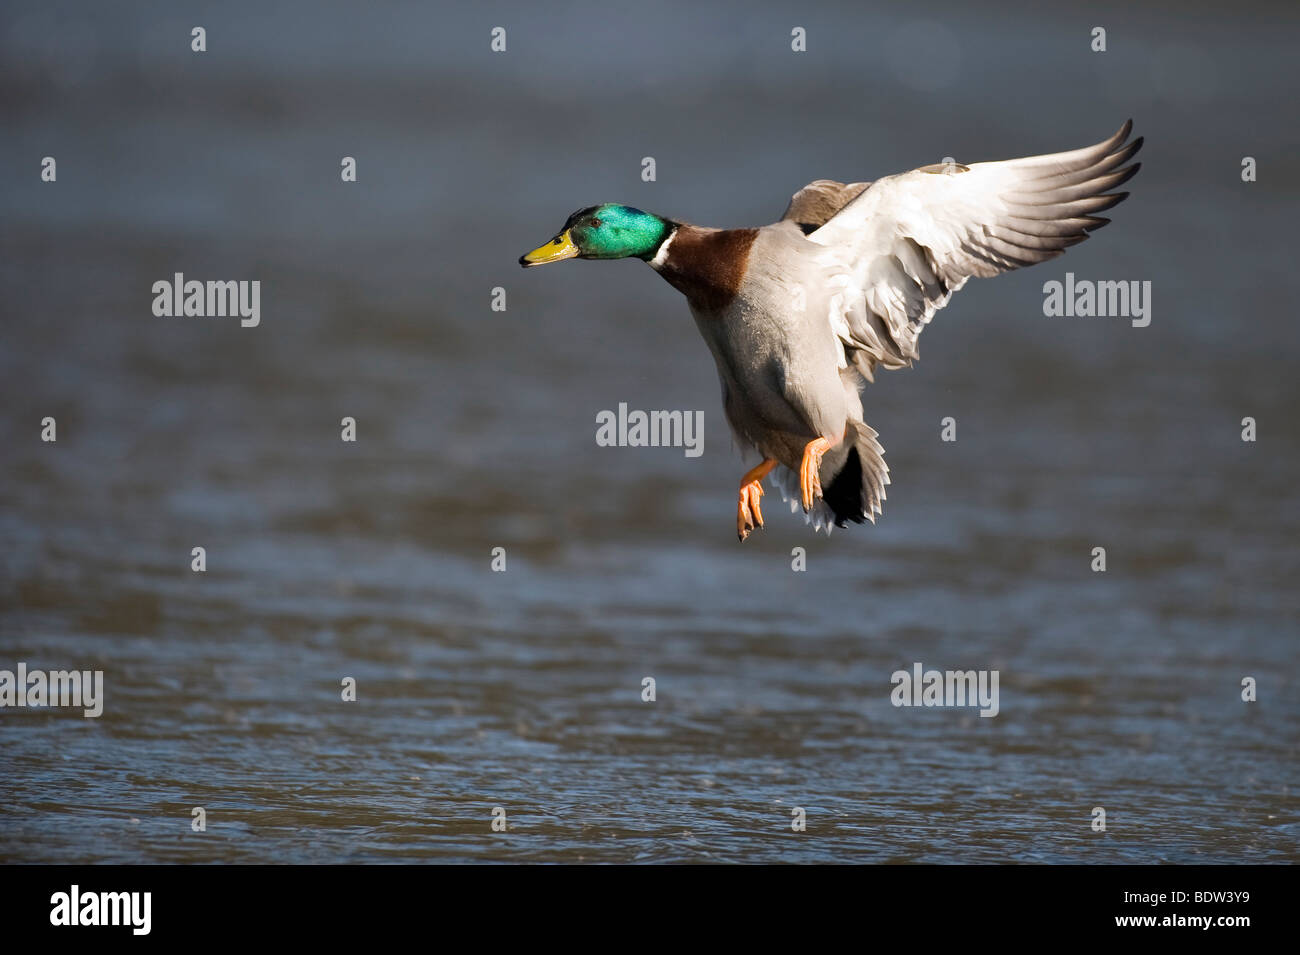 A dabbling duck in flight Stock Photo